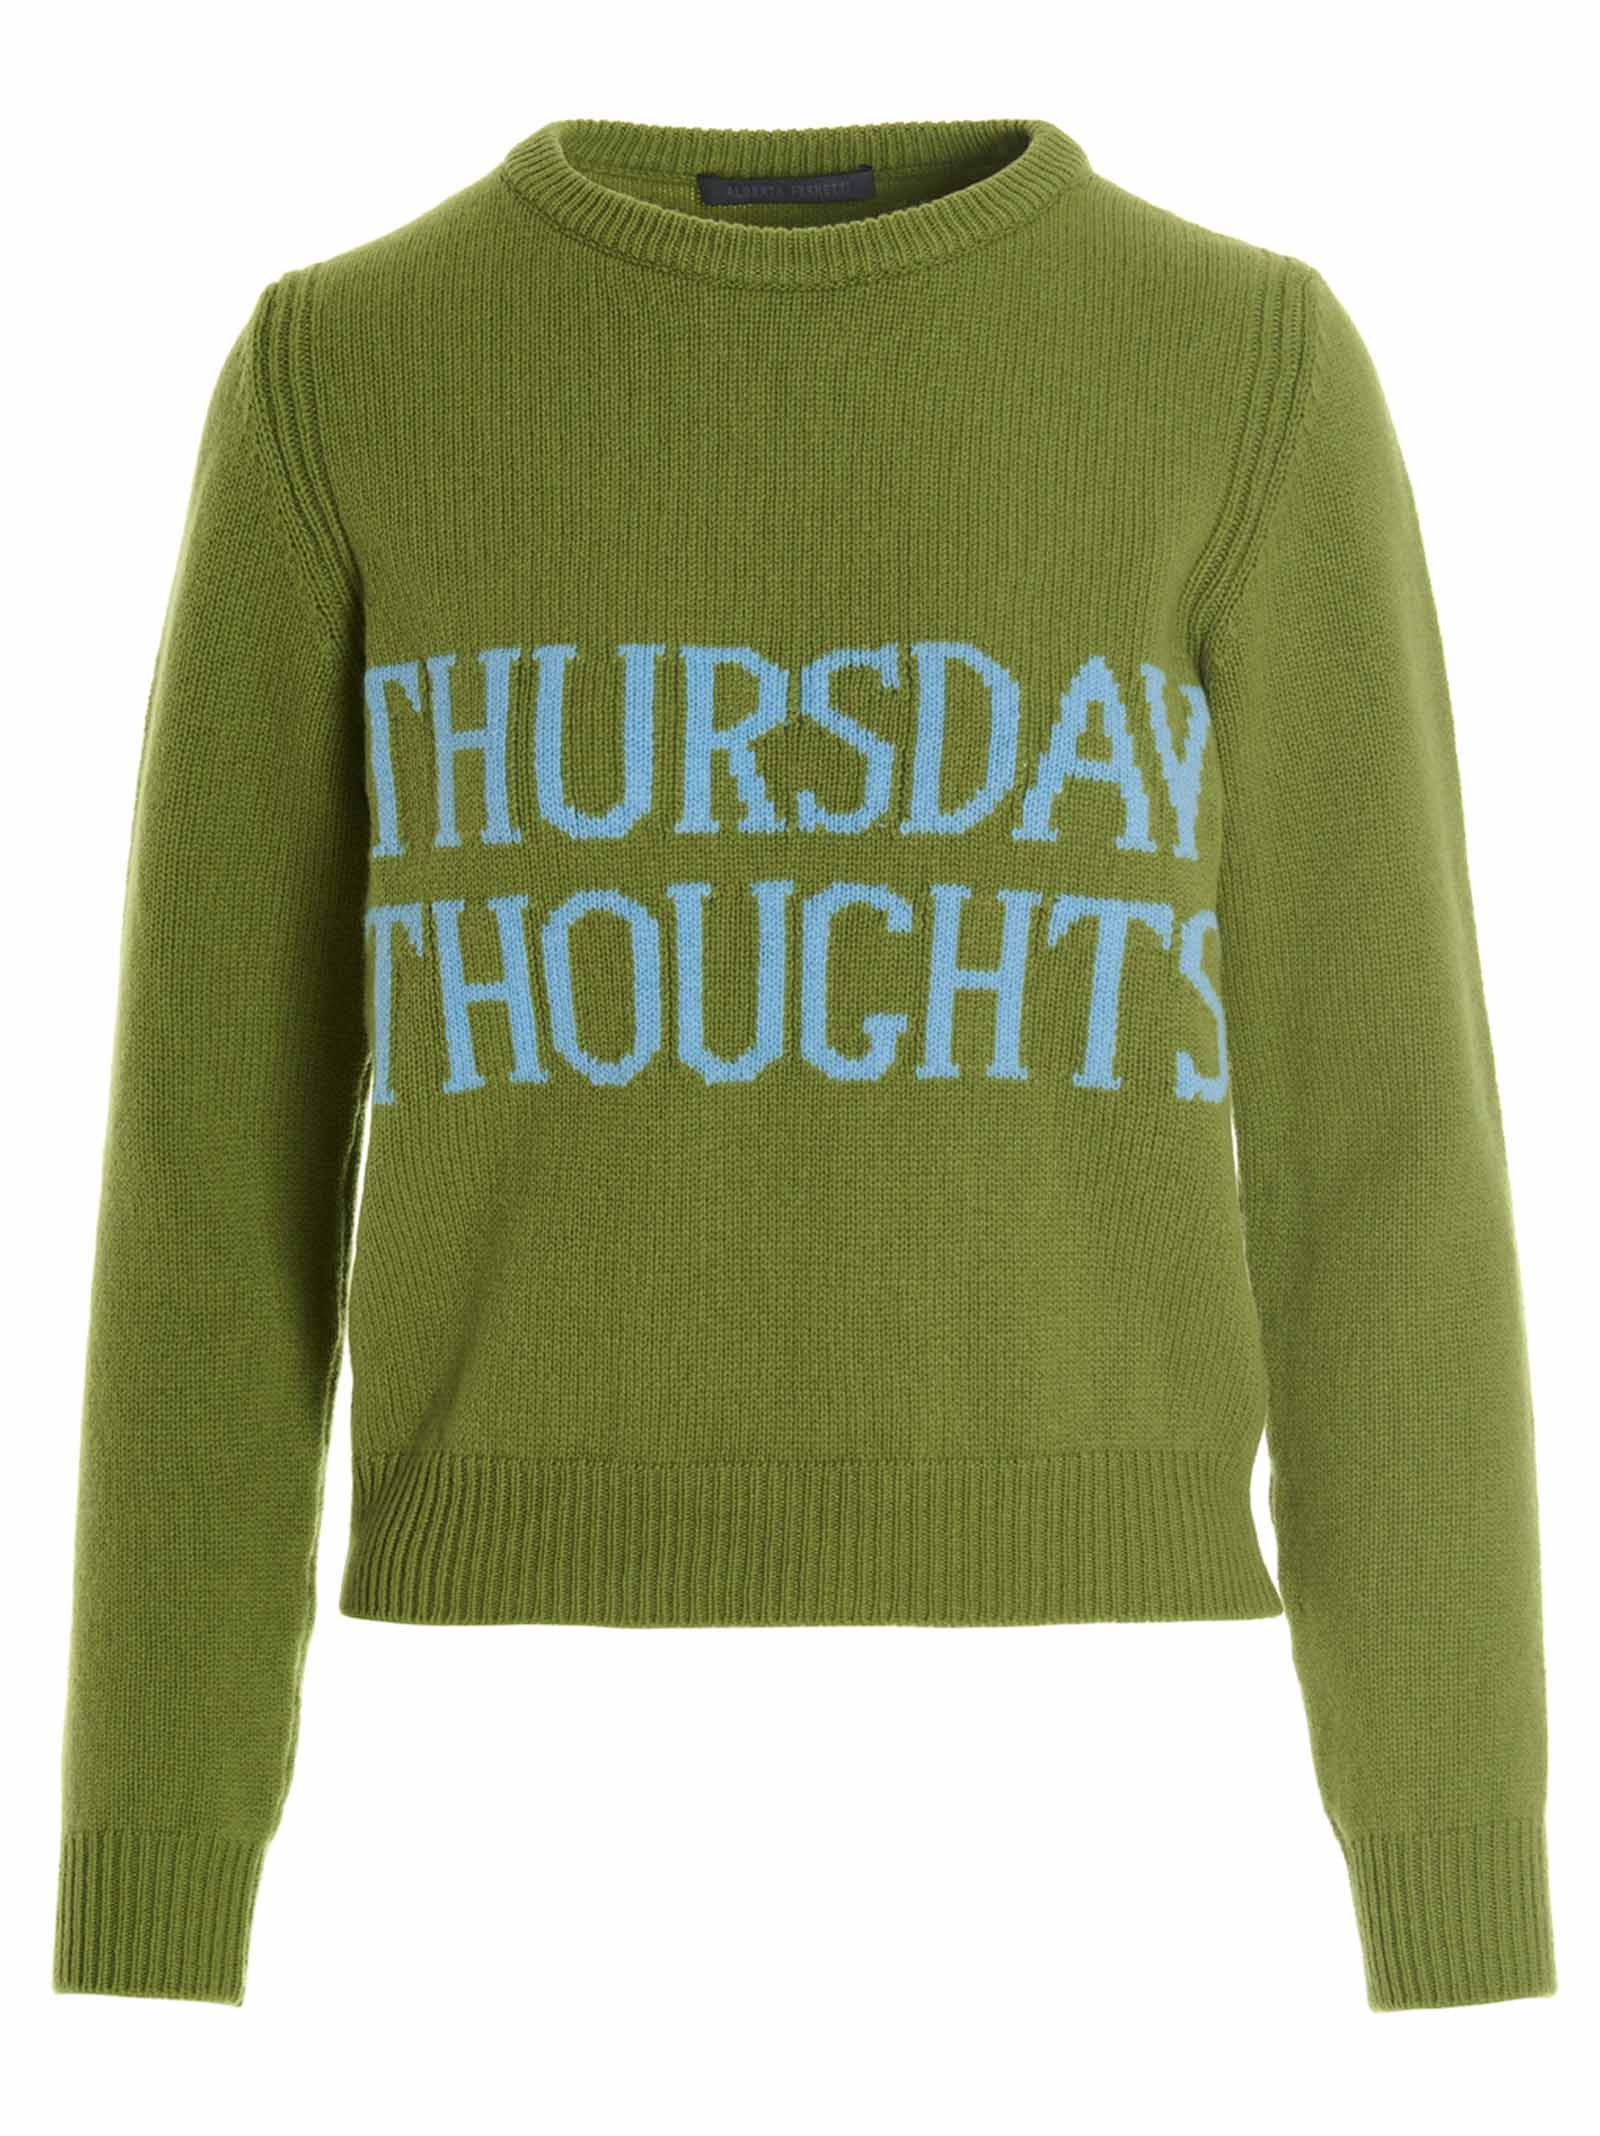 Alberta Ferretti thursday Thoughts Sweater